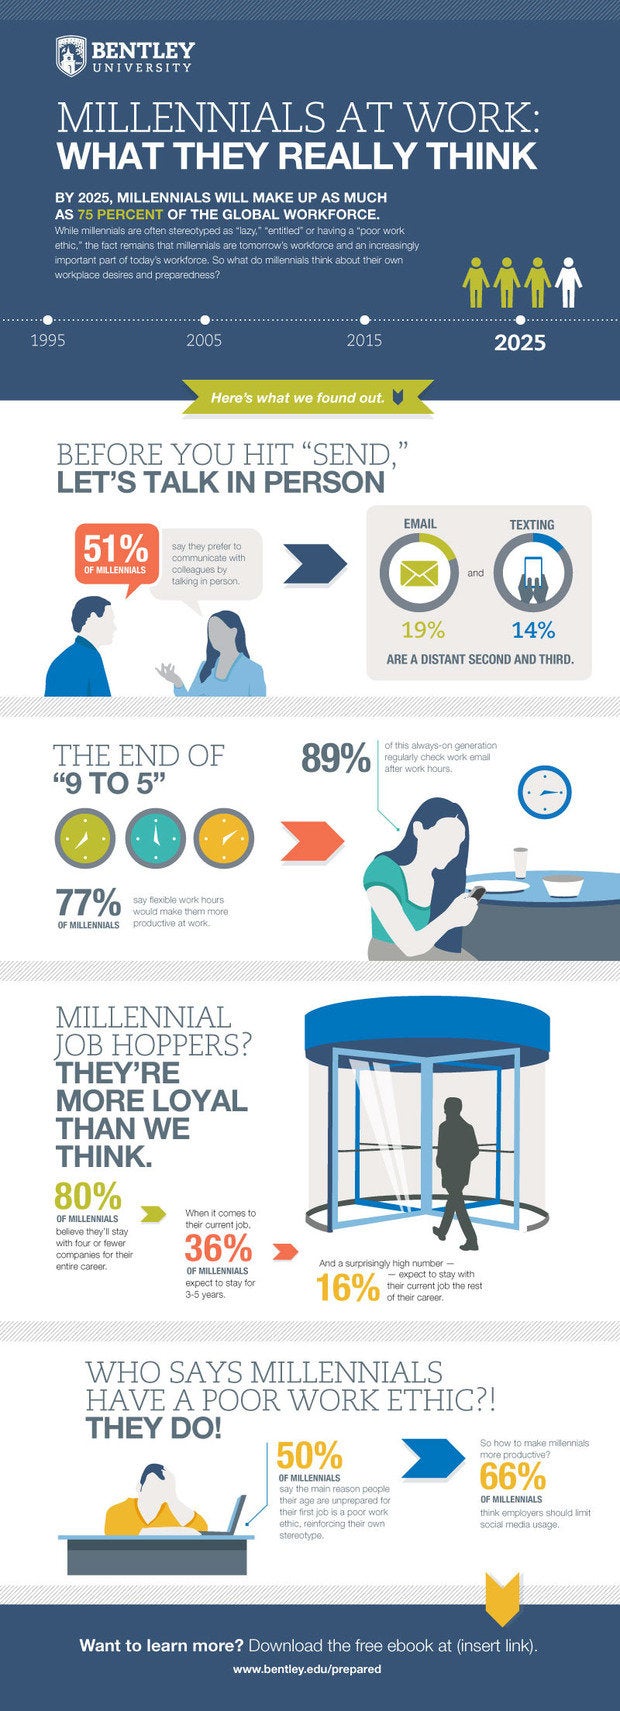 bentley infographic millennials at work nov 2014